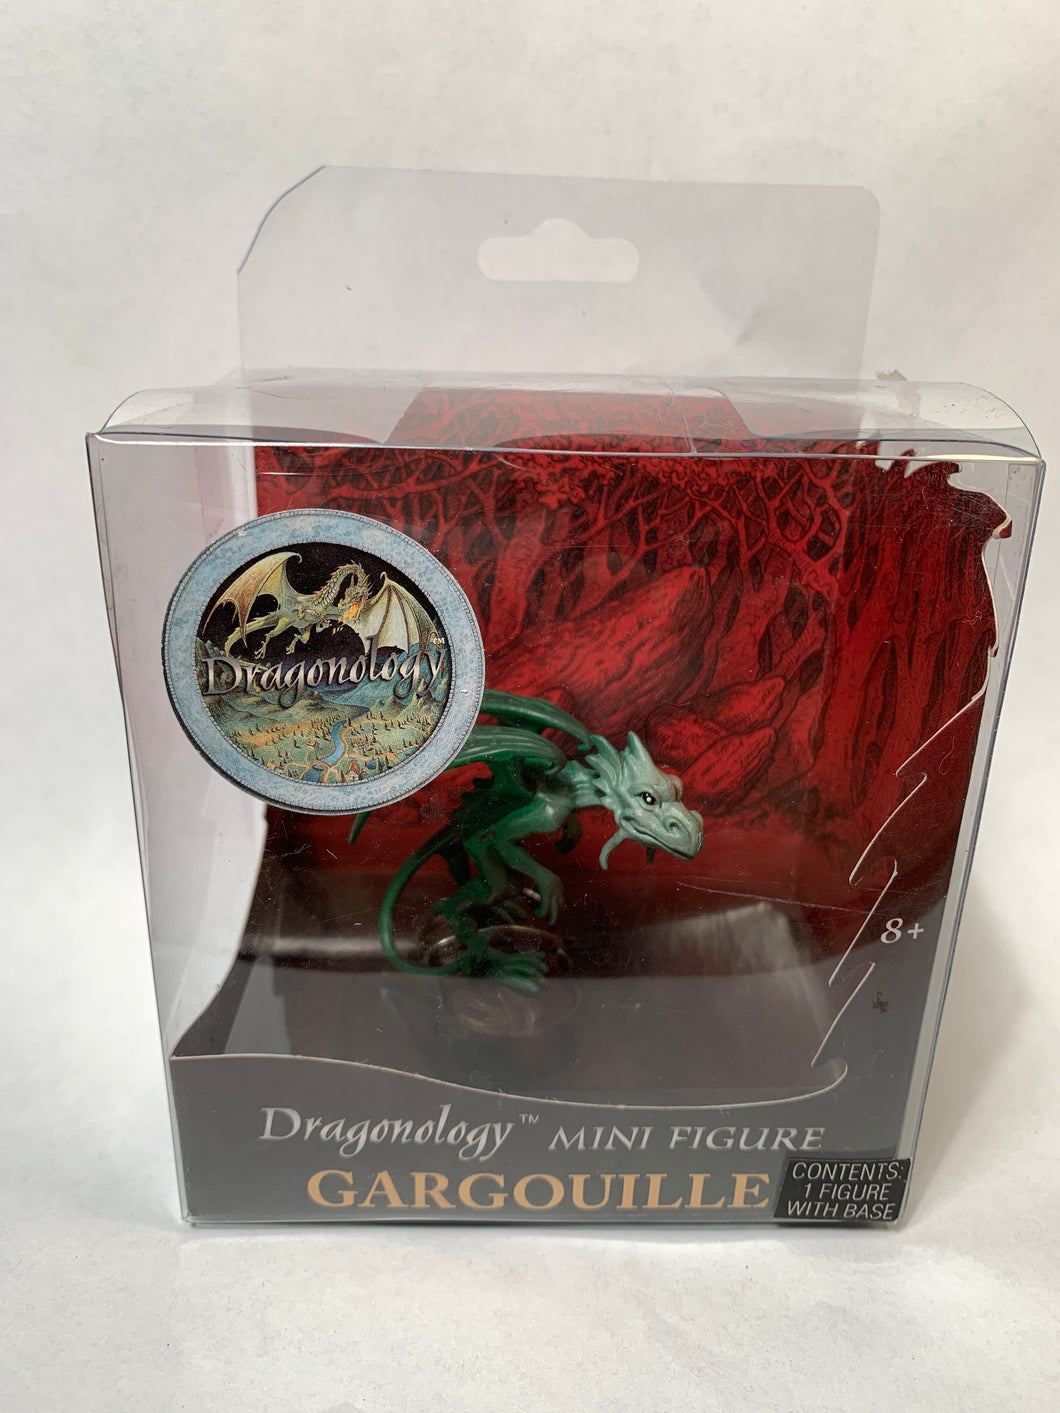 Dragonology Mini Figure “Gargouille”